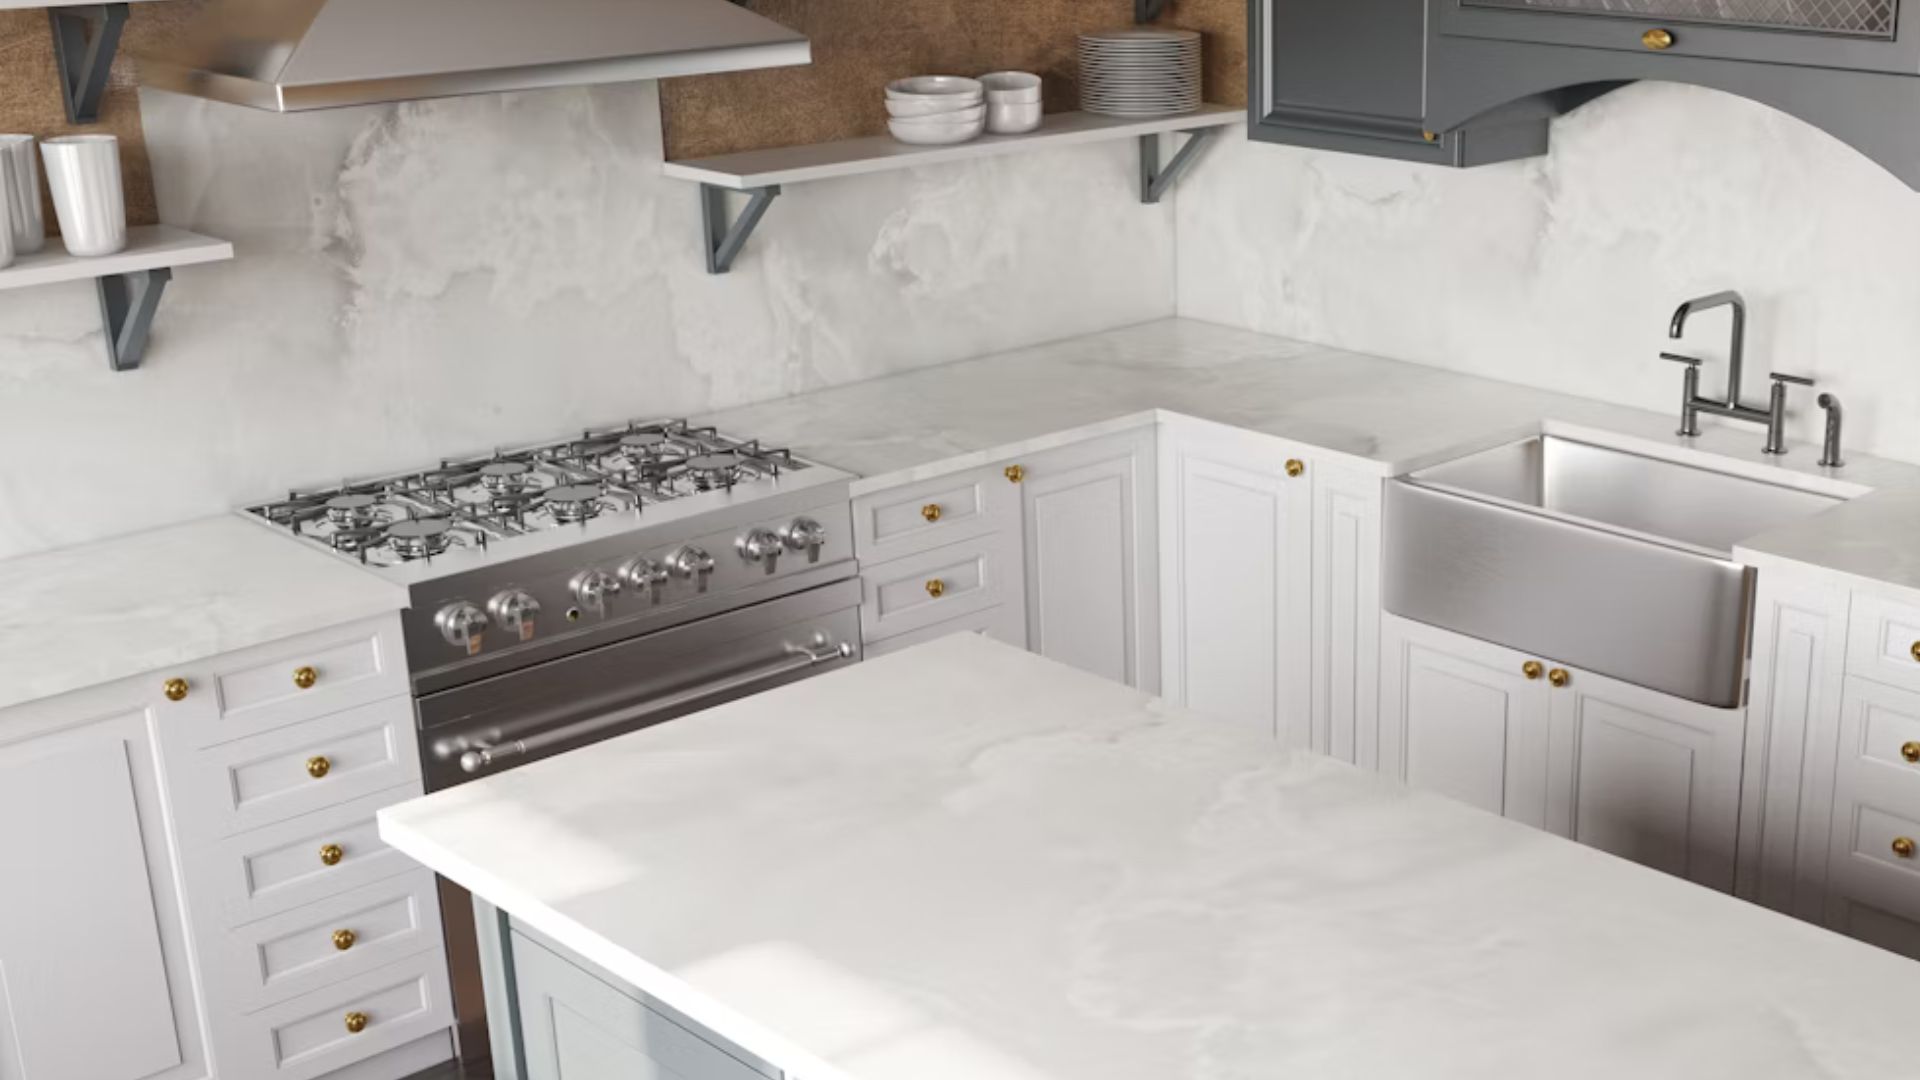 Design ideas with white quartz countertops